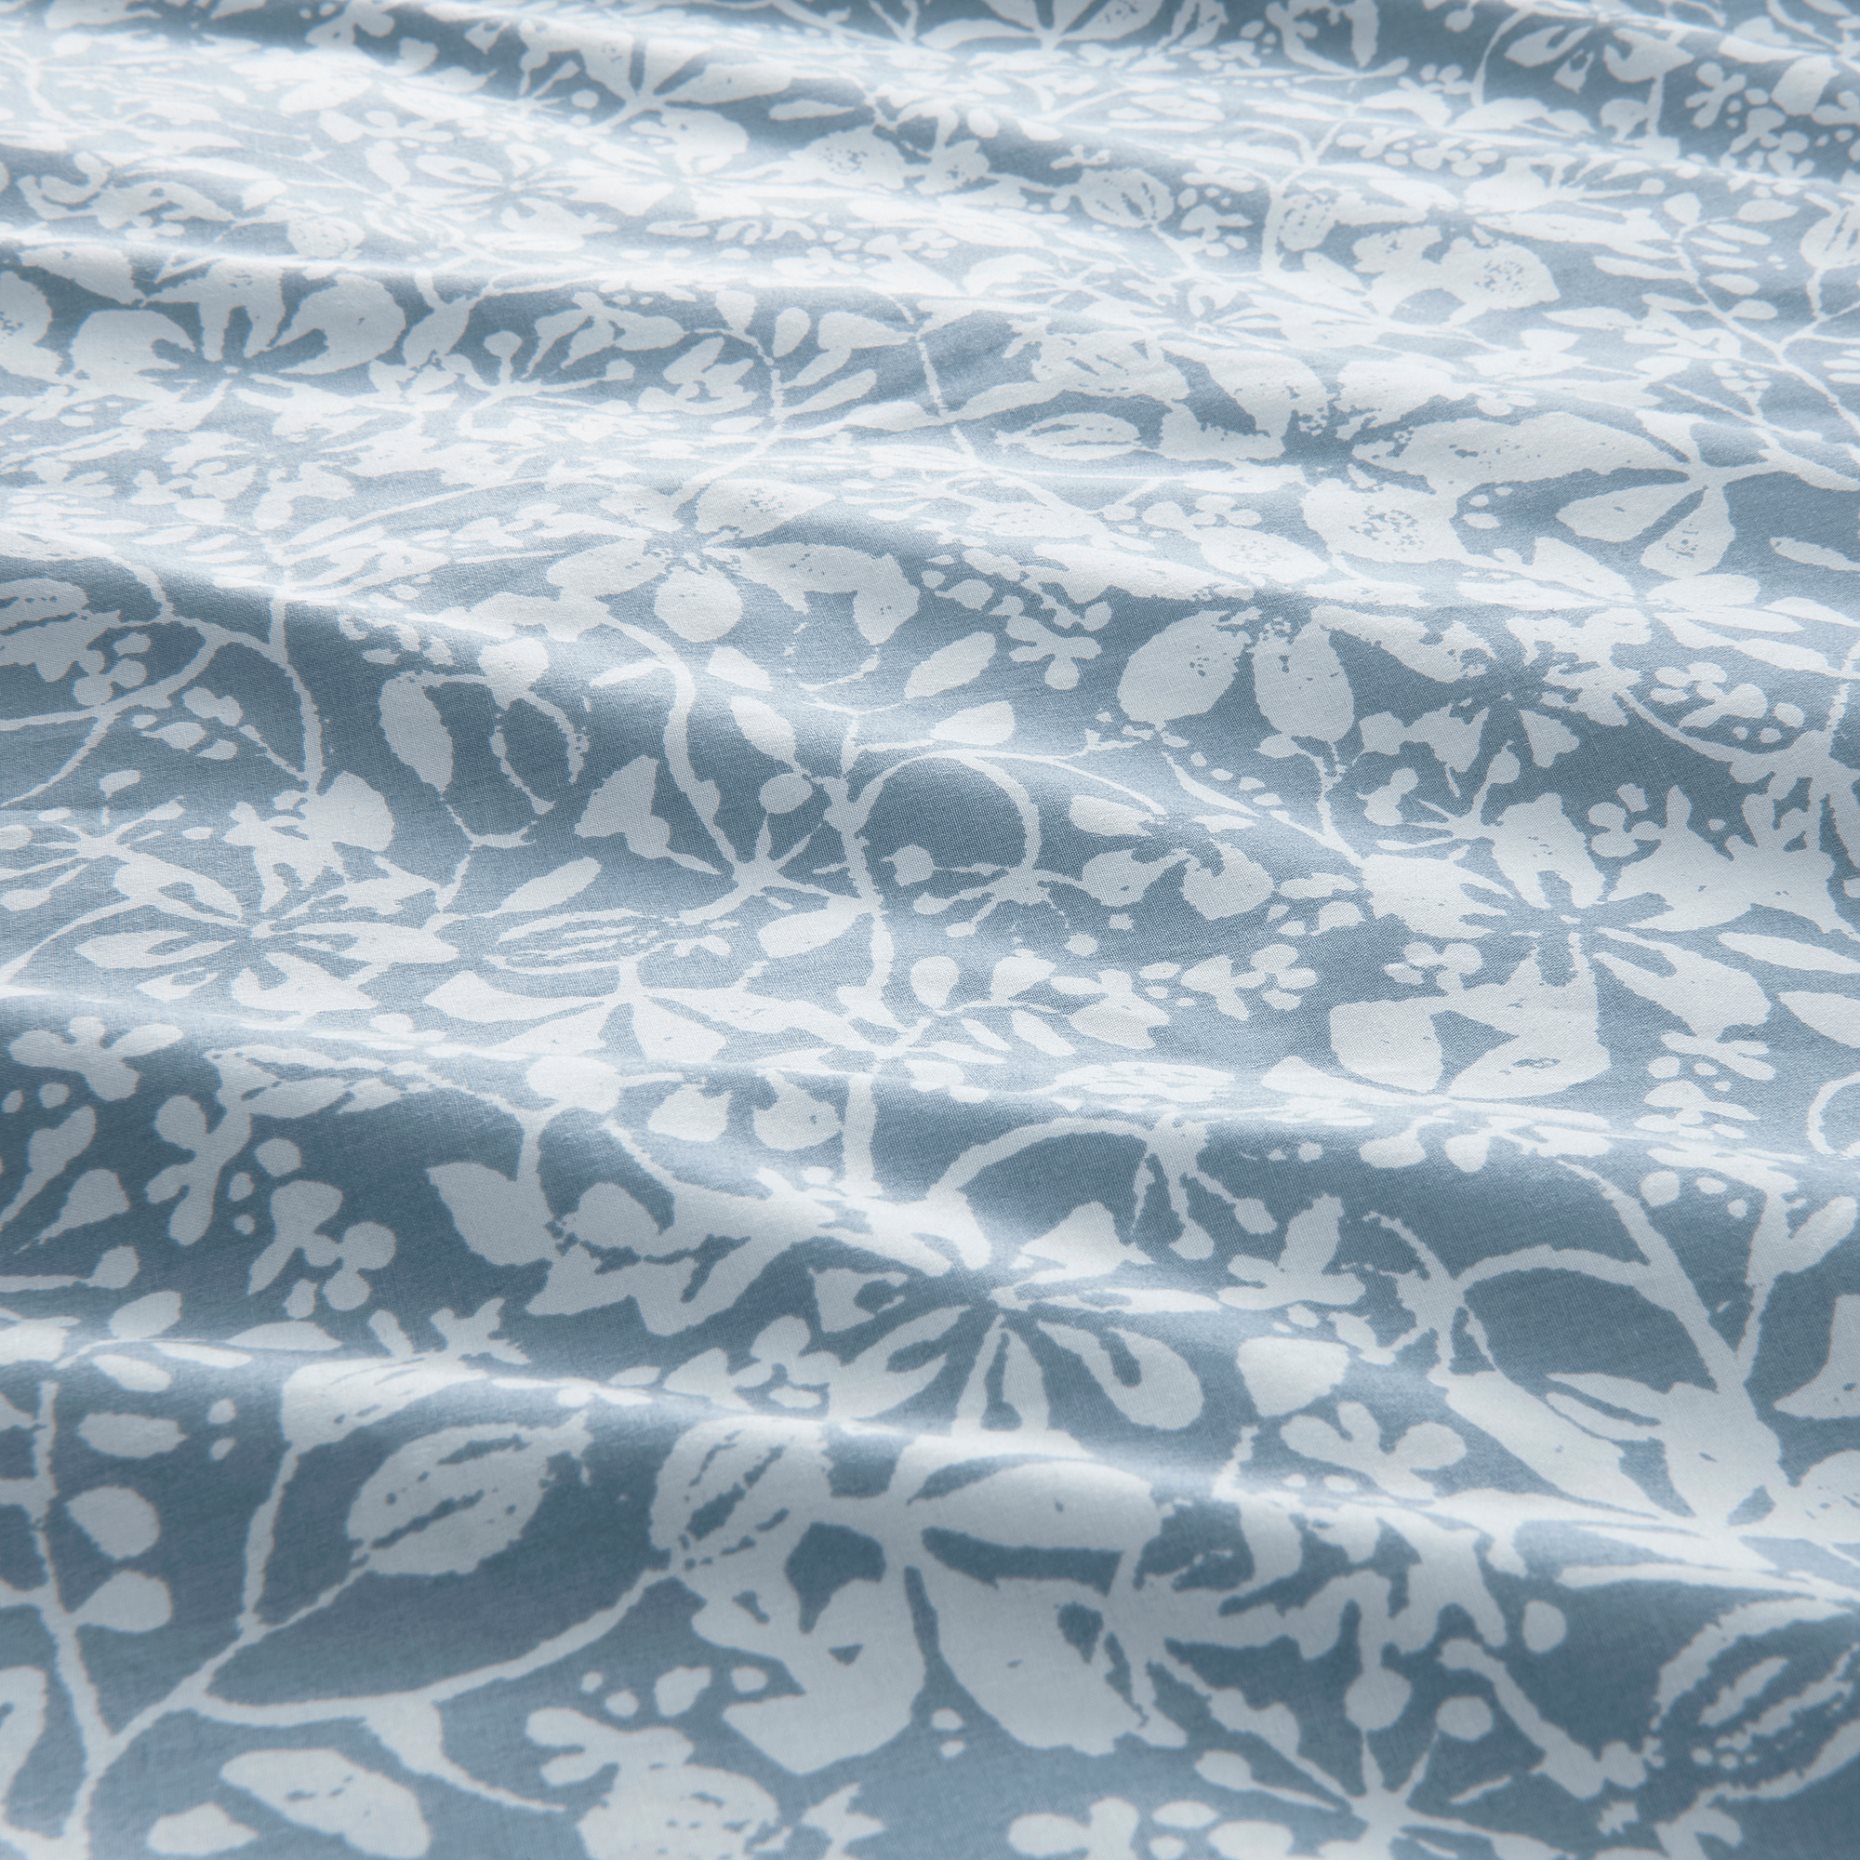 SOMMARSLÖJA, duvet cover and 2 pillowcases/floral pattern, 150x200/50x60 cm, 505.297.63